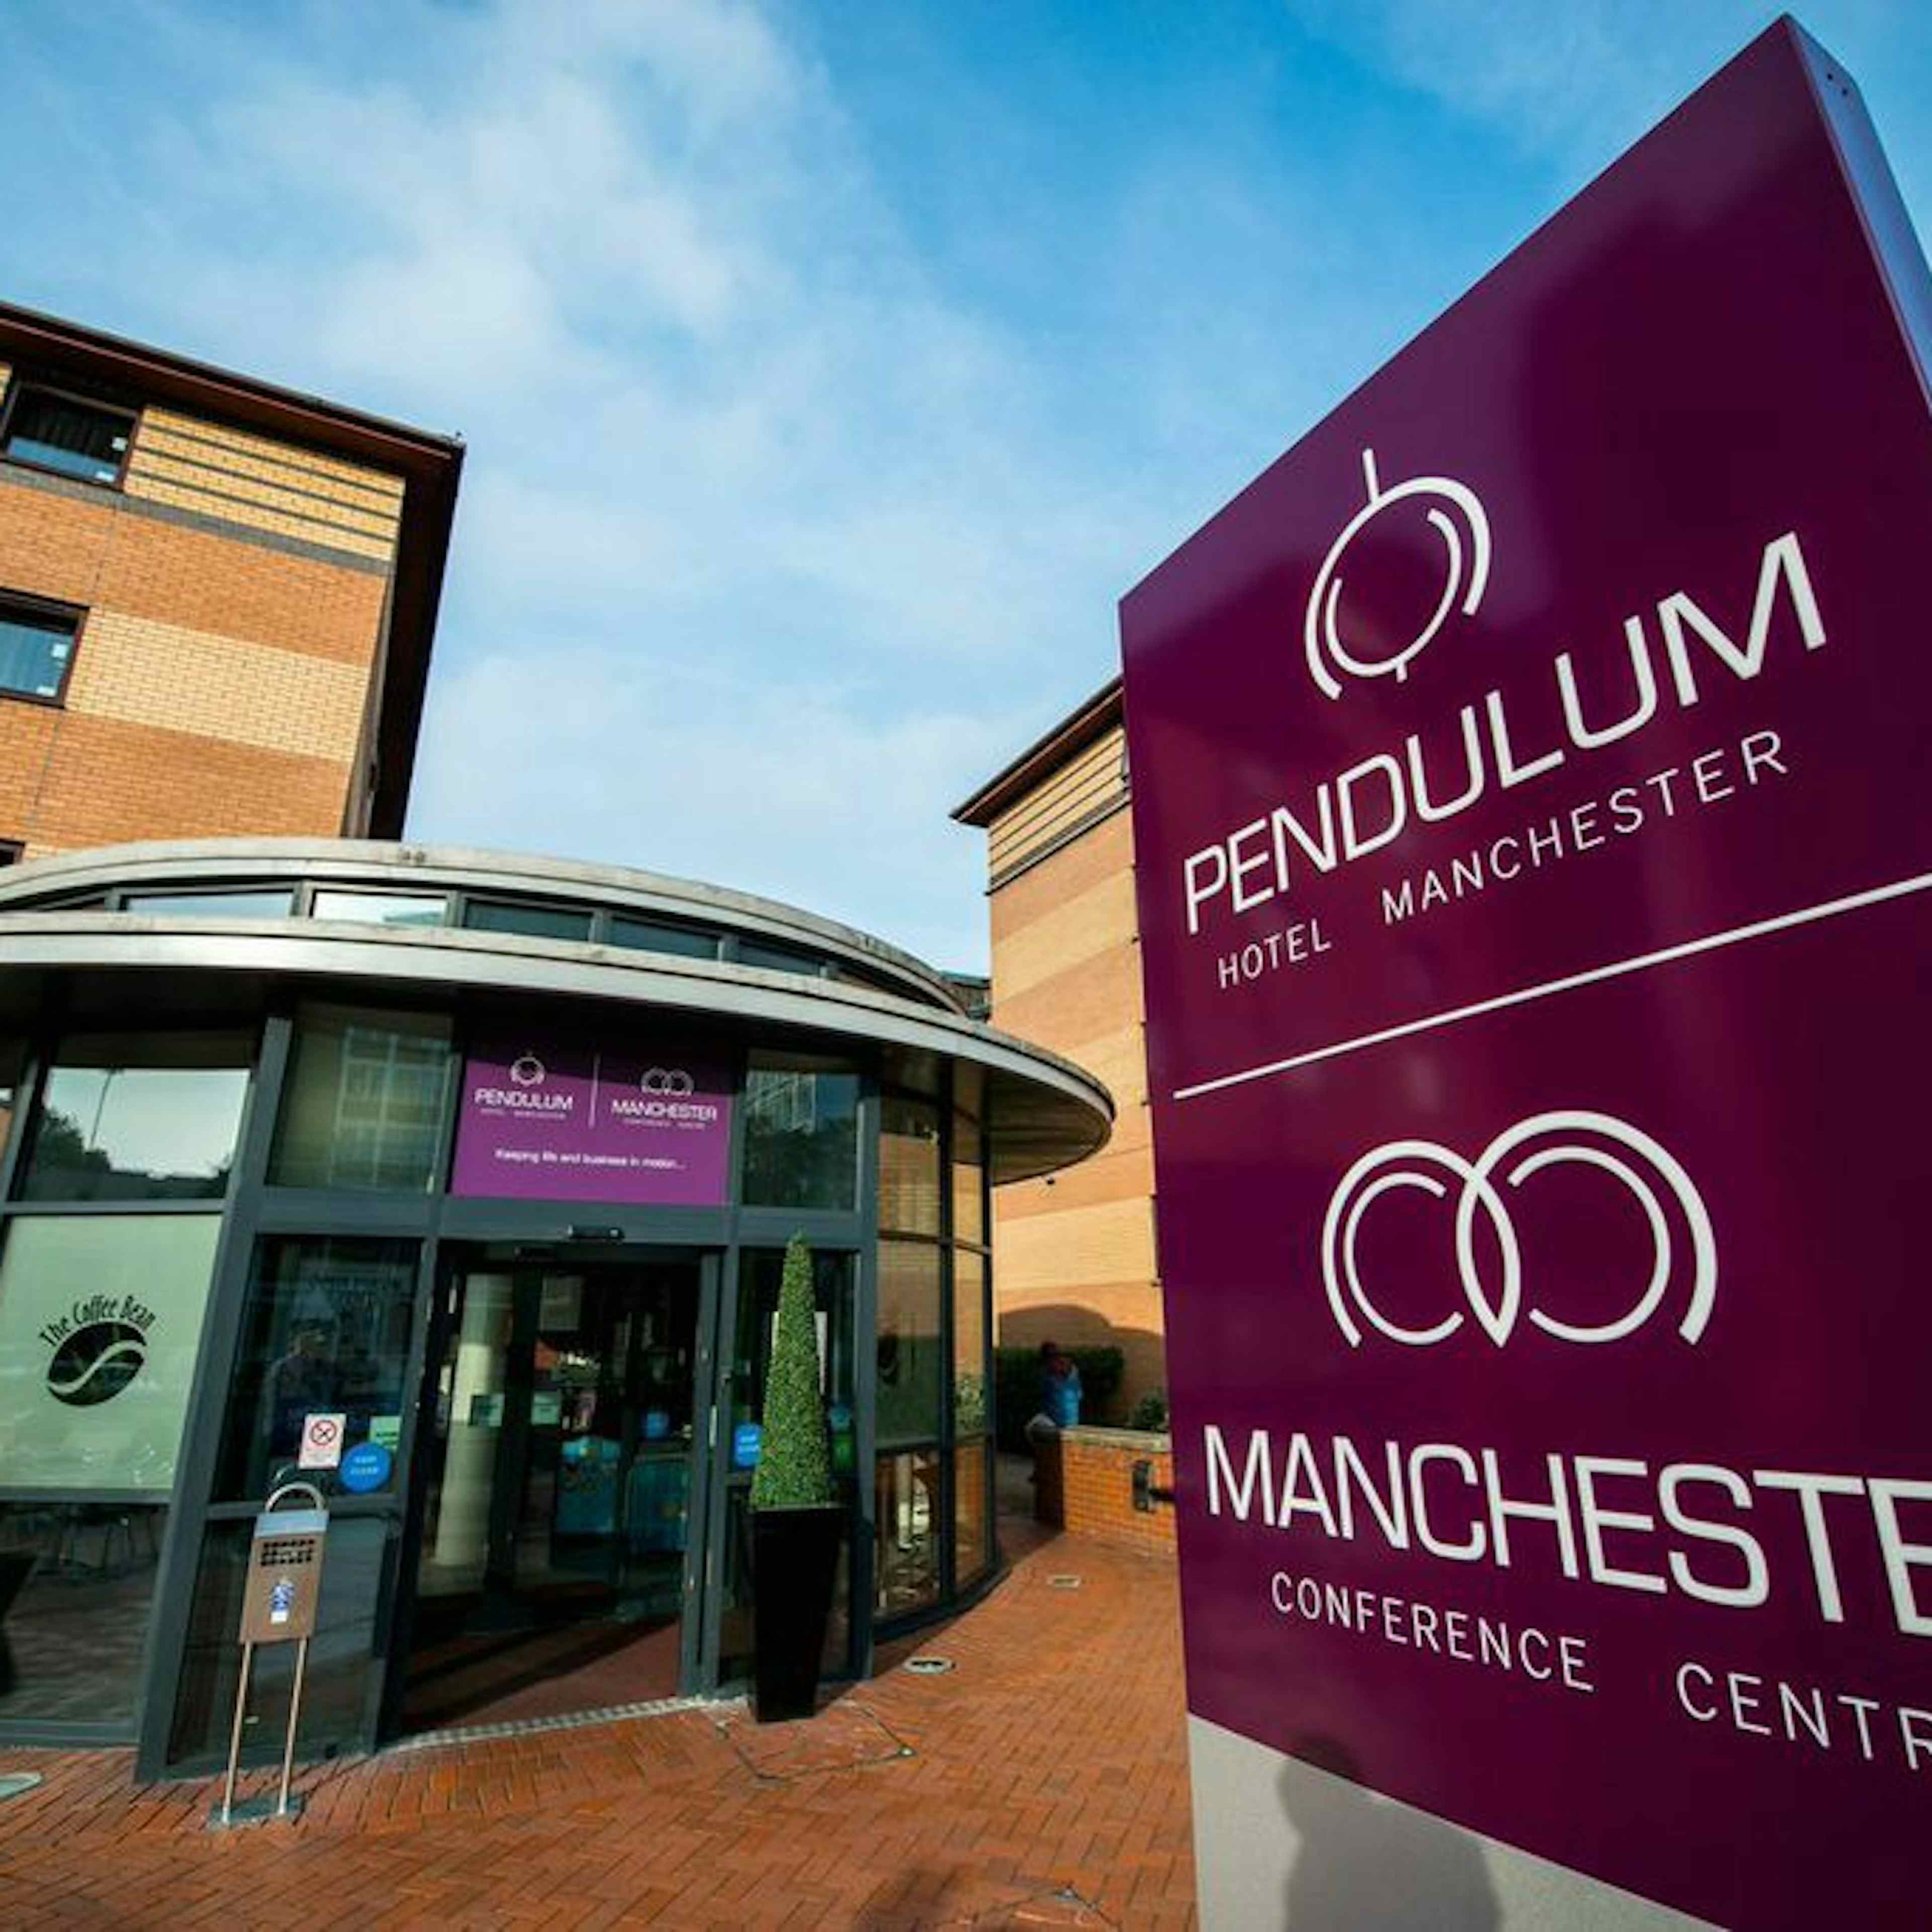 Manchester Conference Centre & Pendulum Hotel - Cotton Theatre image 2